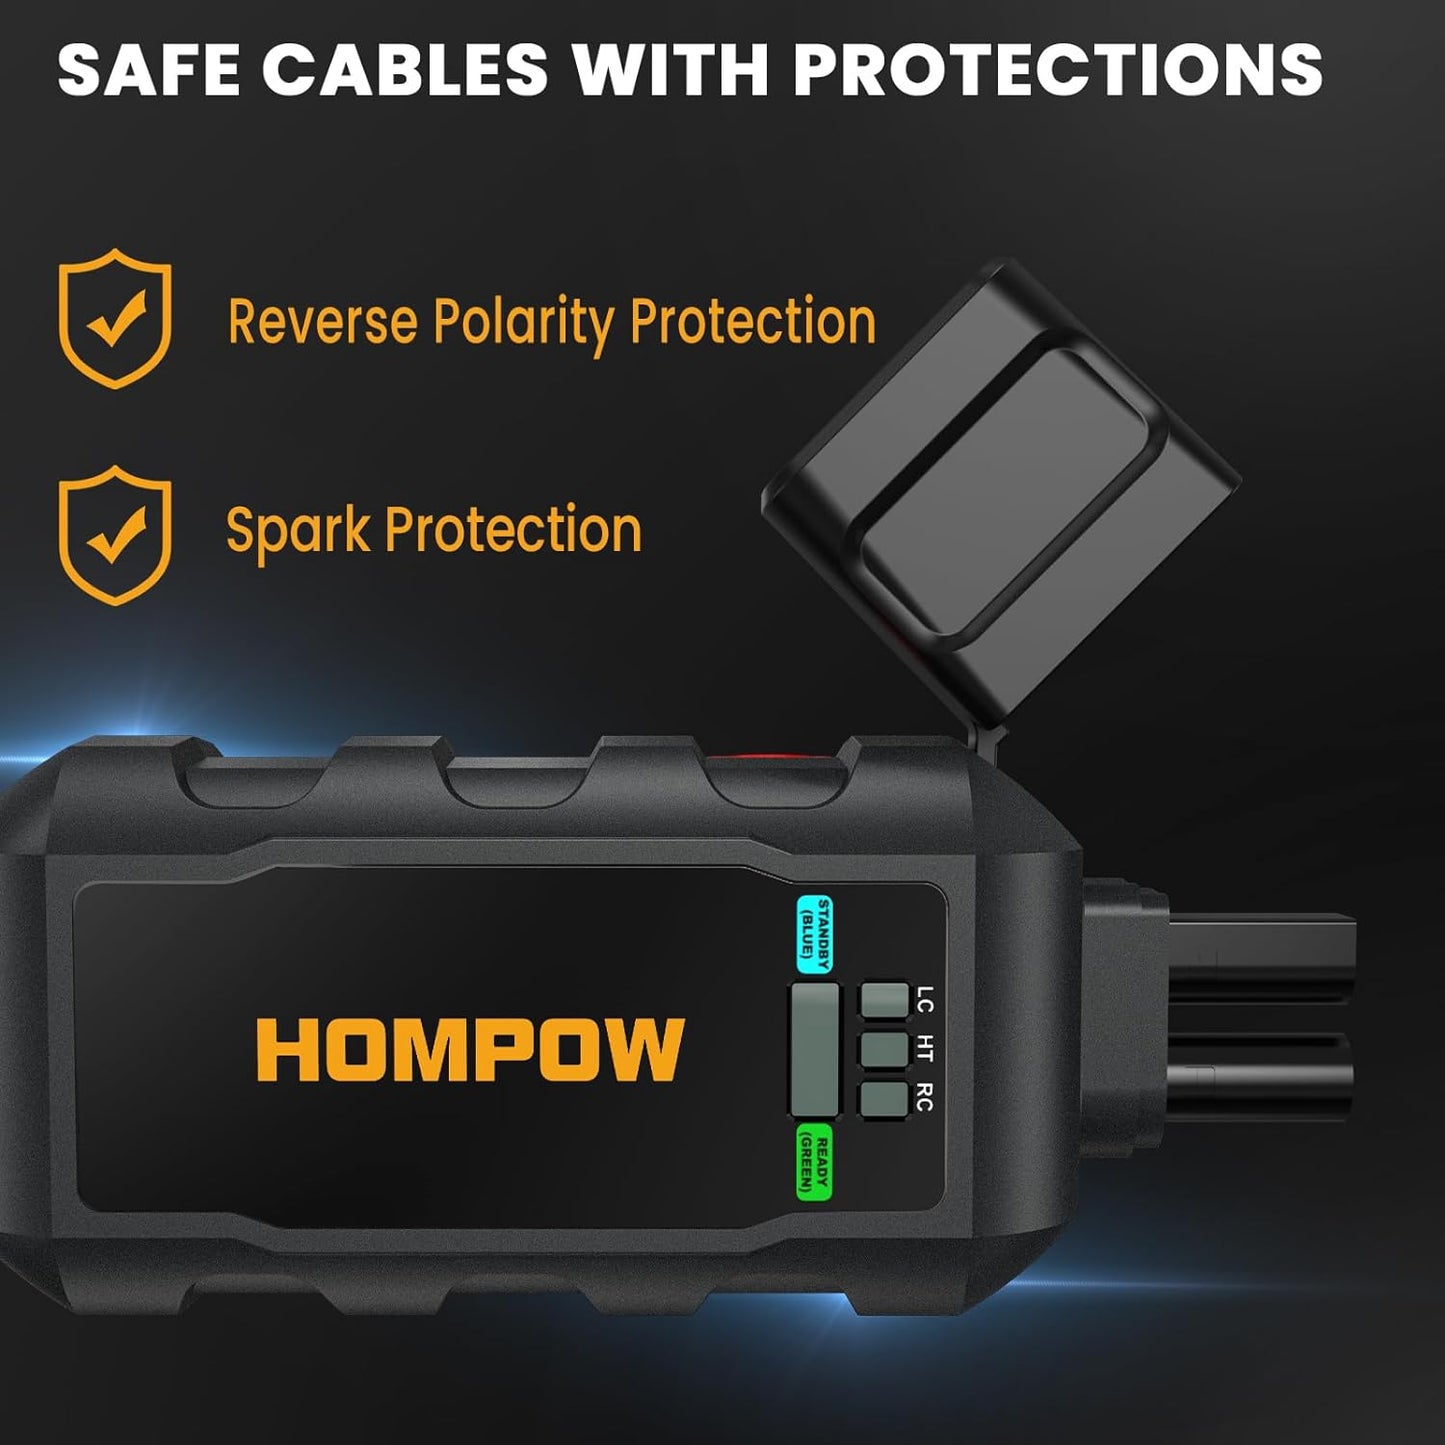 Hompow 6000A Peak Jump Starter Battery Pack Safety